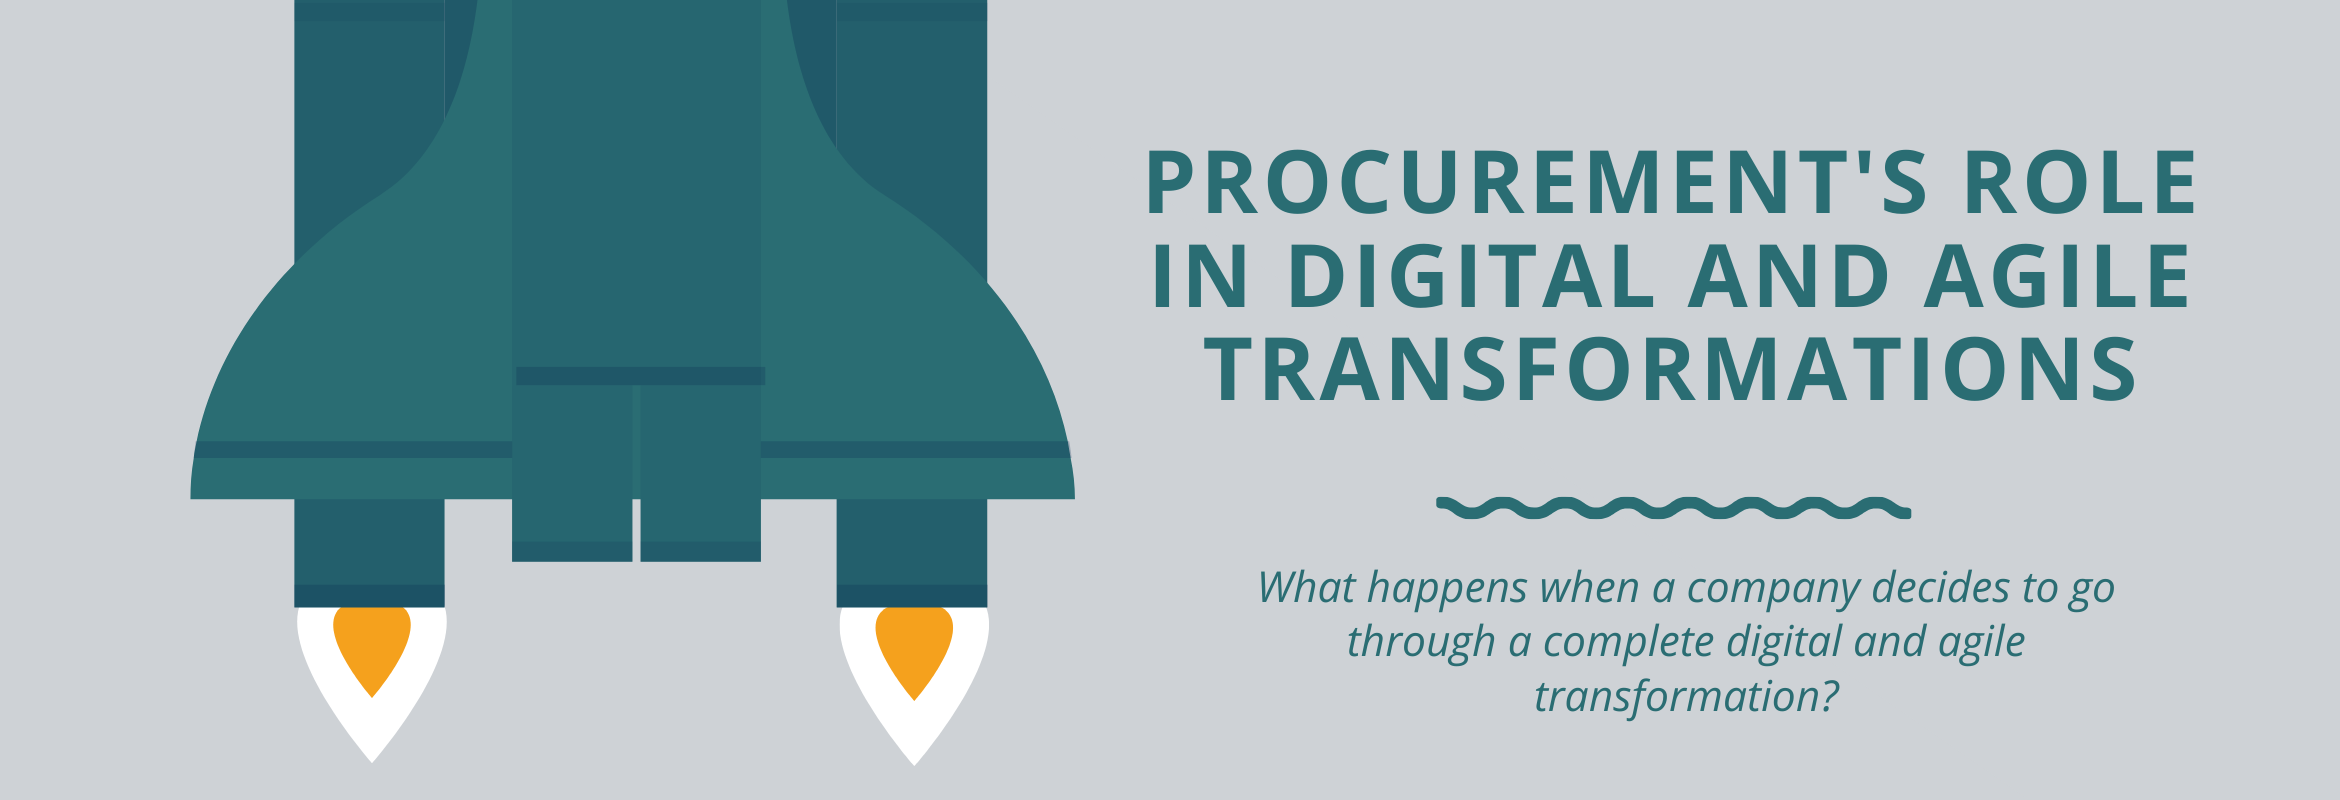 Procurement digital and agile transformation